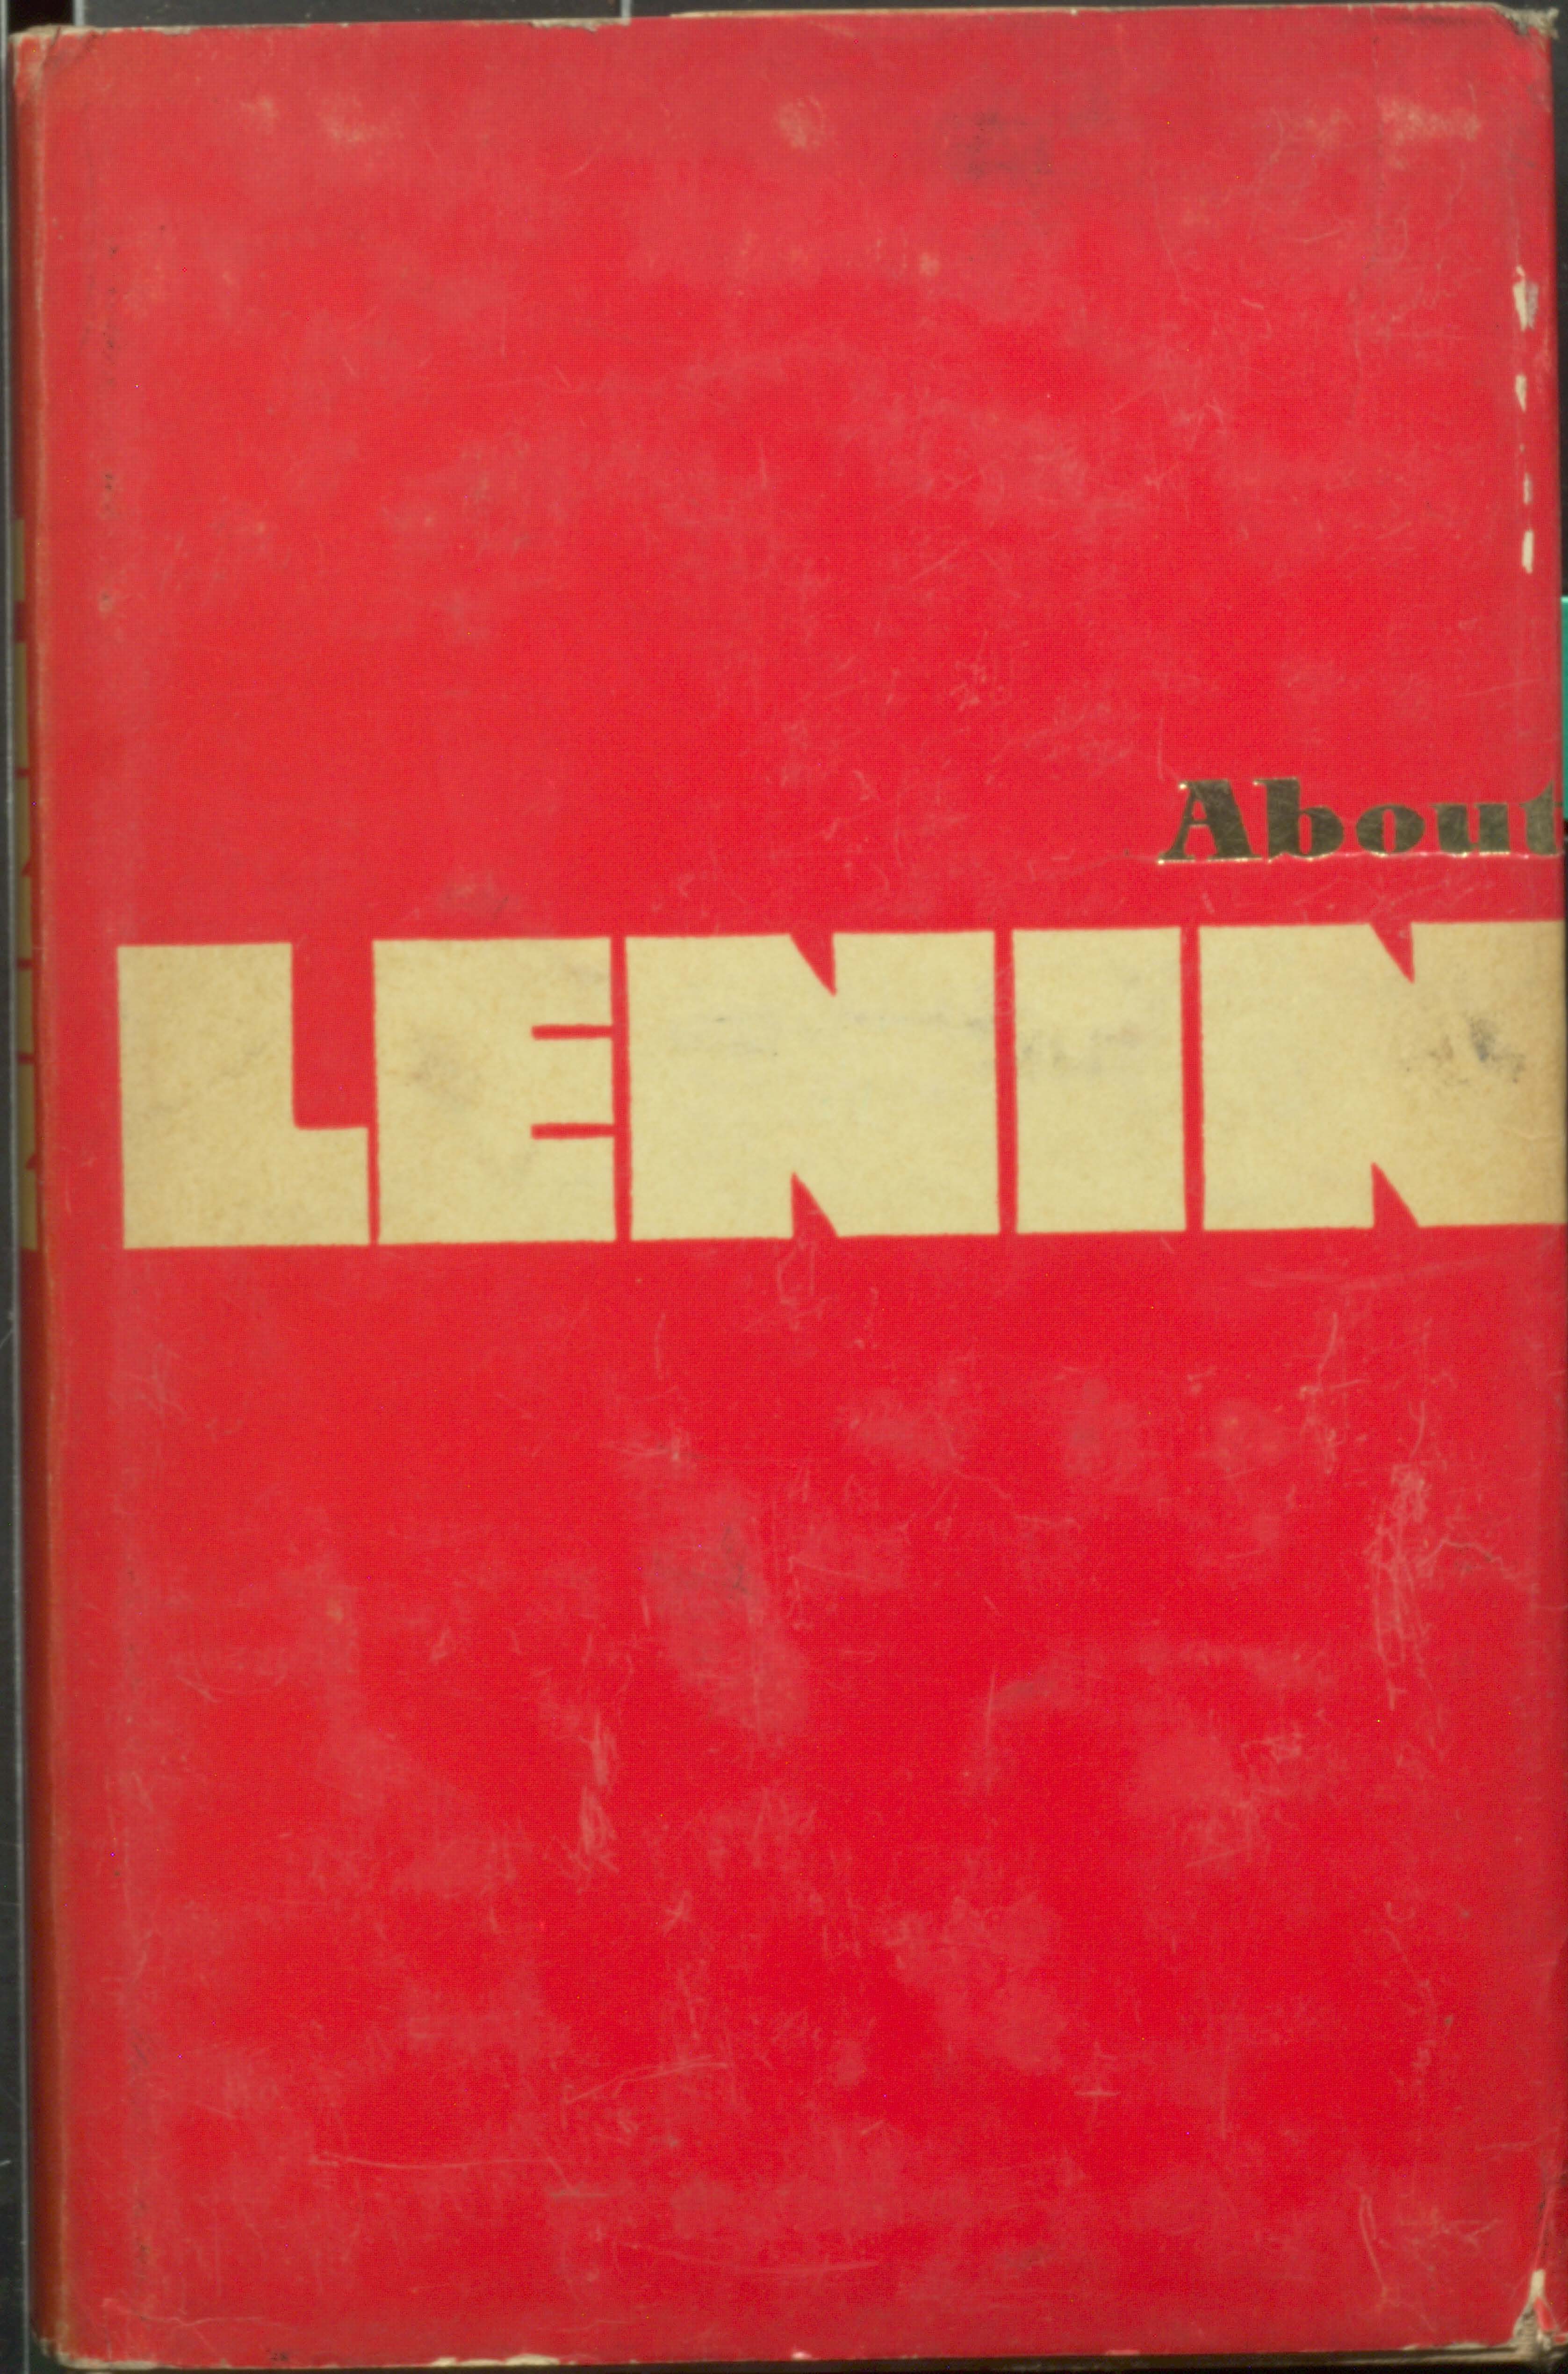 Lenin about